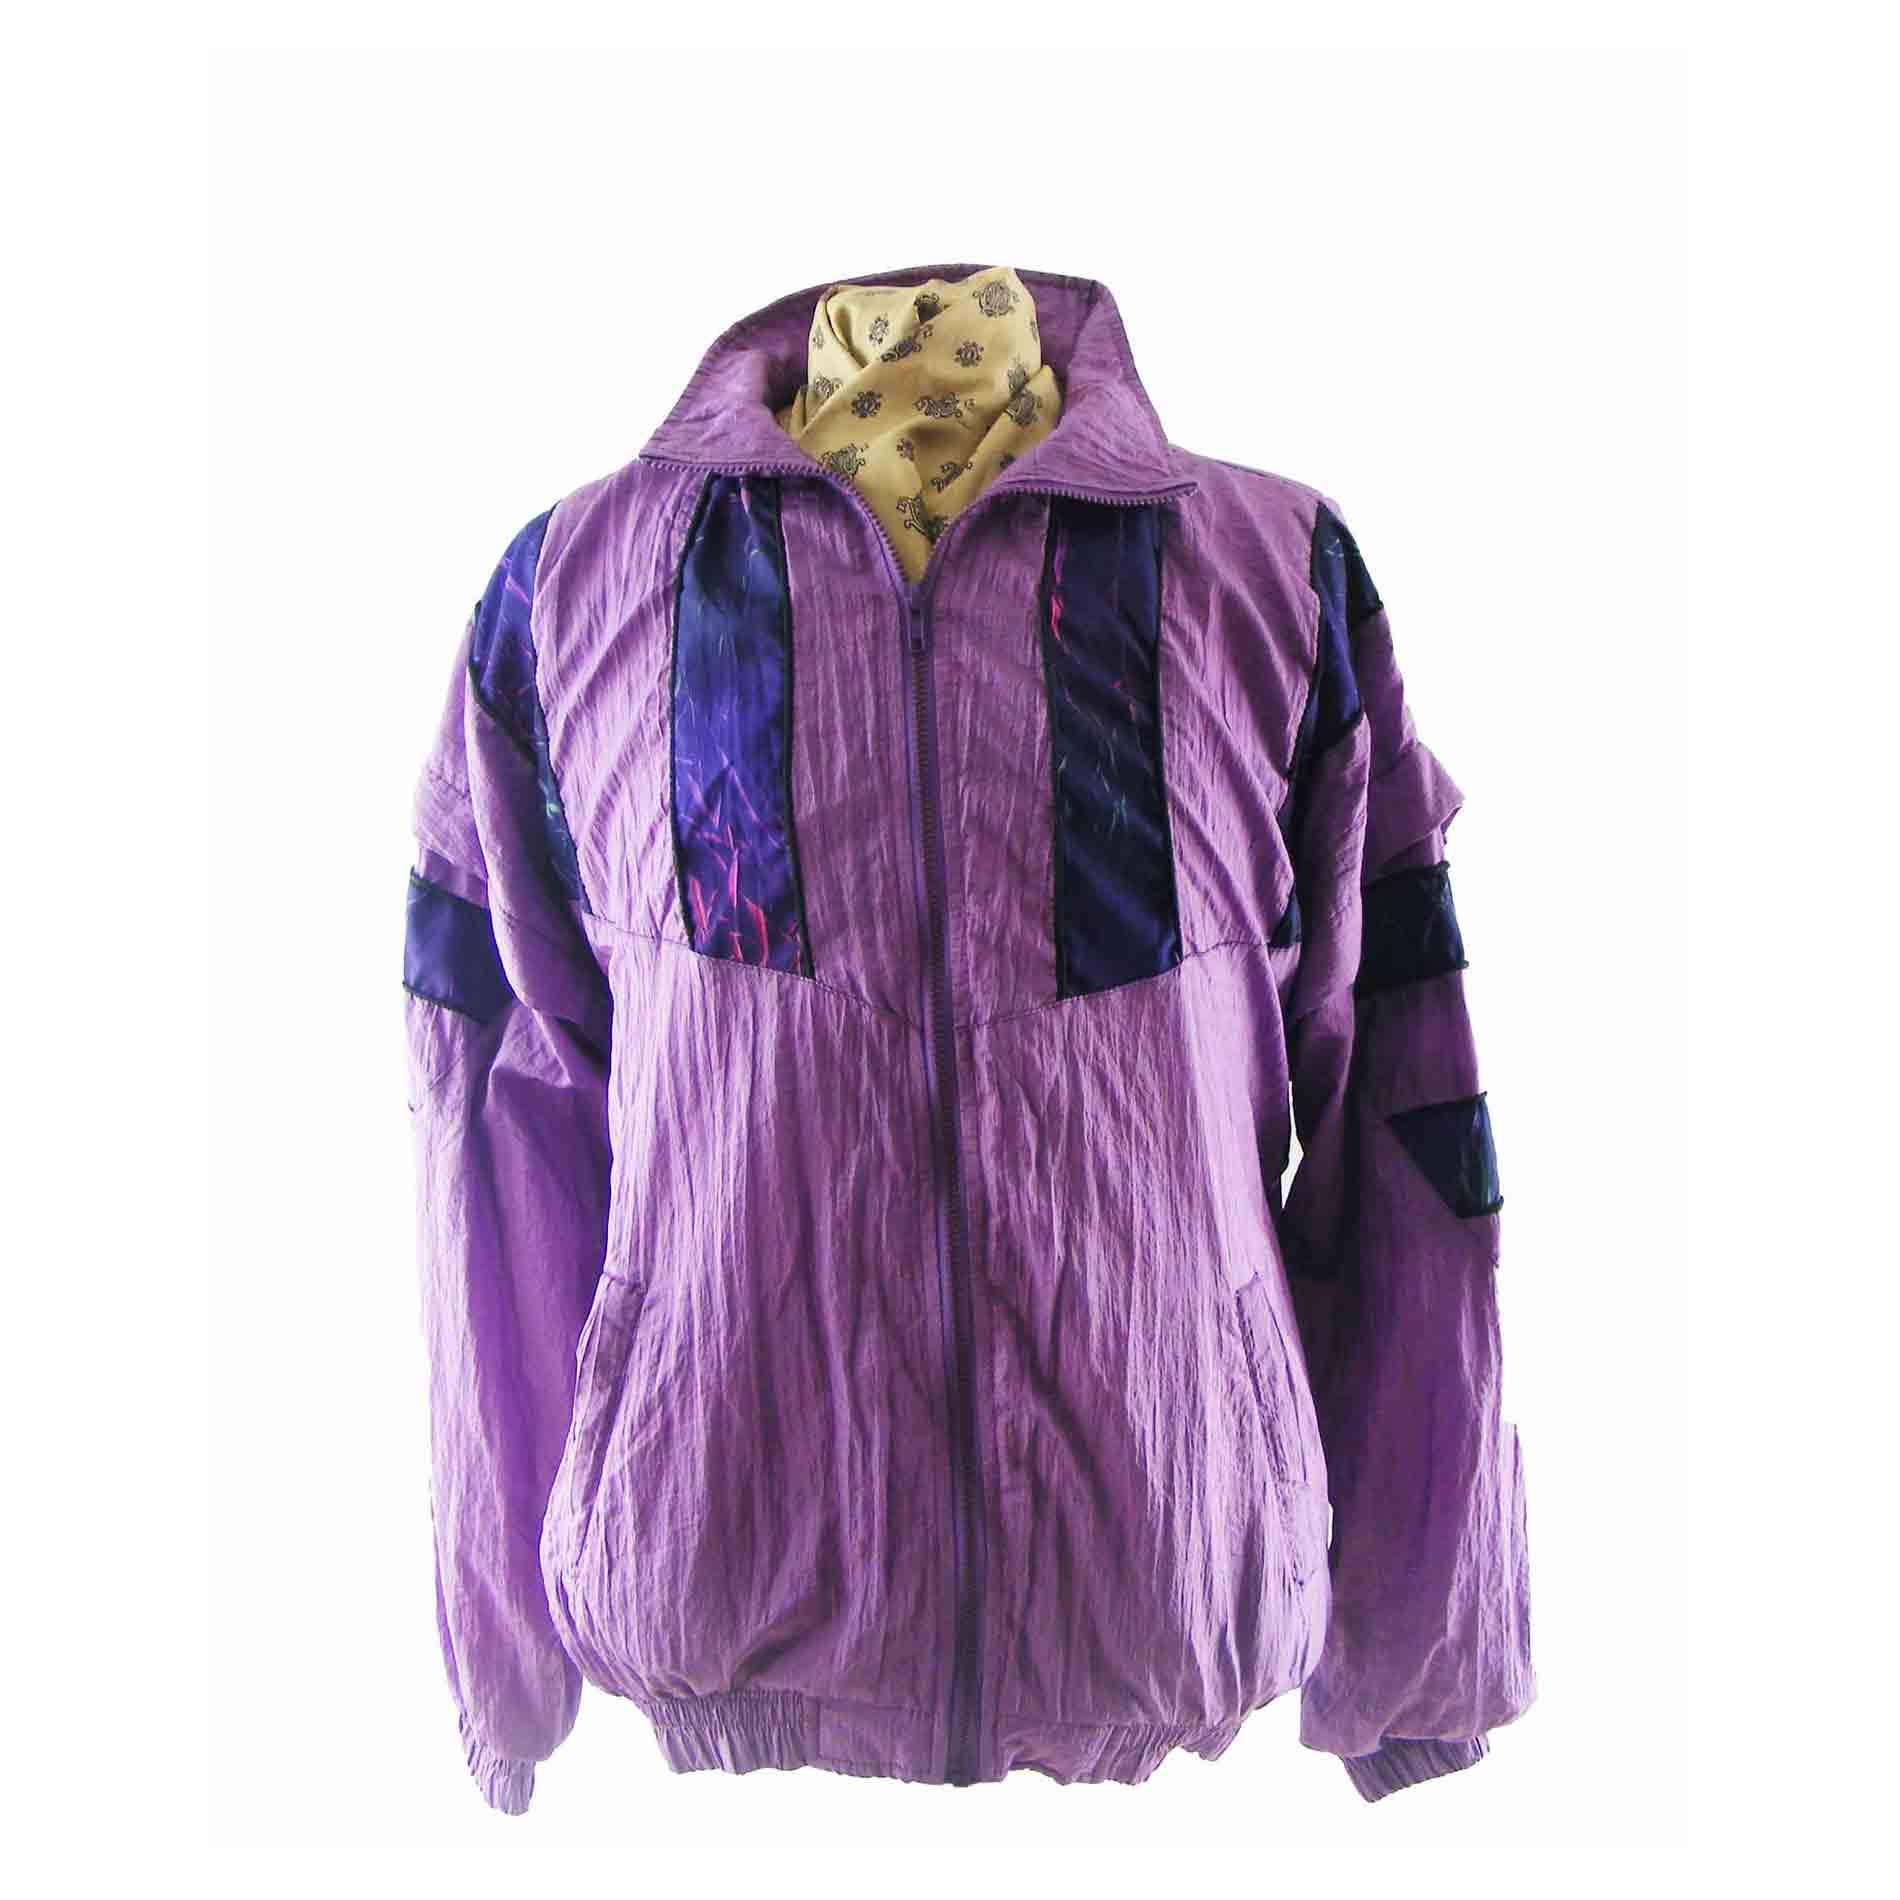 80s retro purple shell suit top